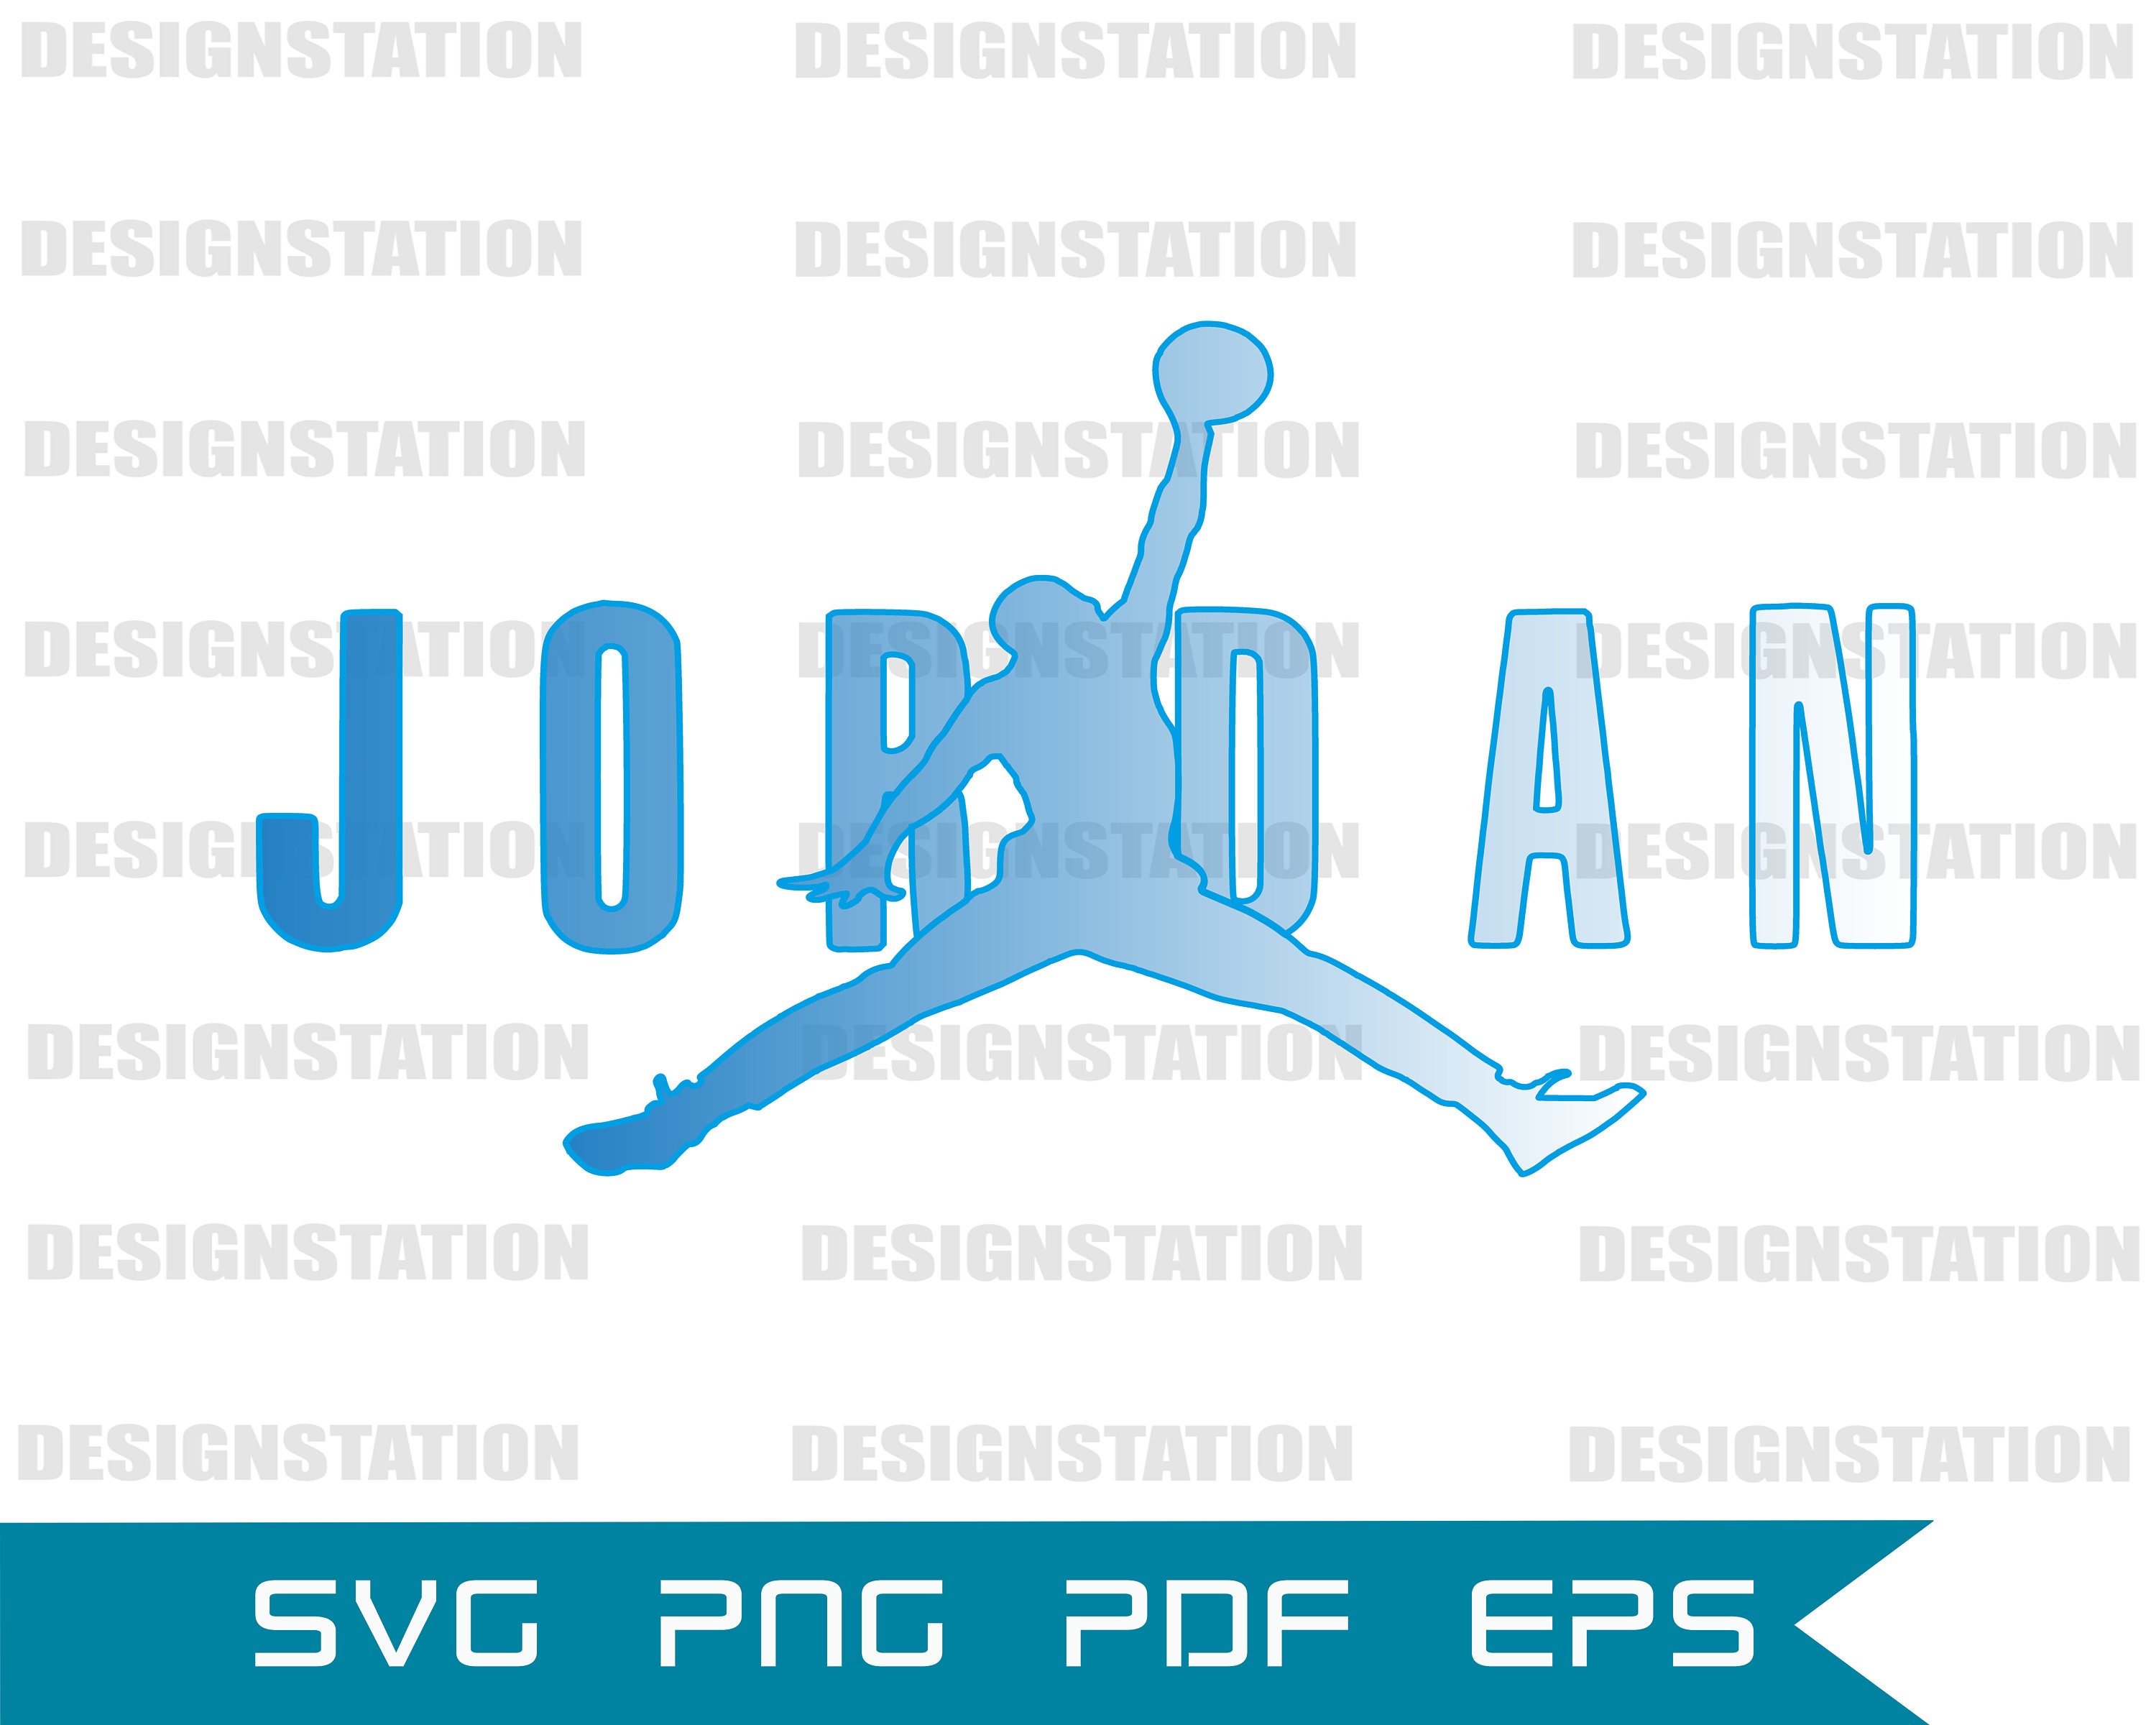 jumpman logo png